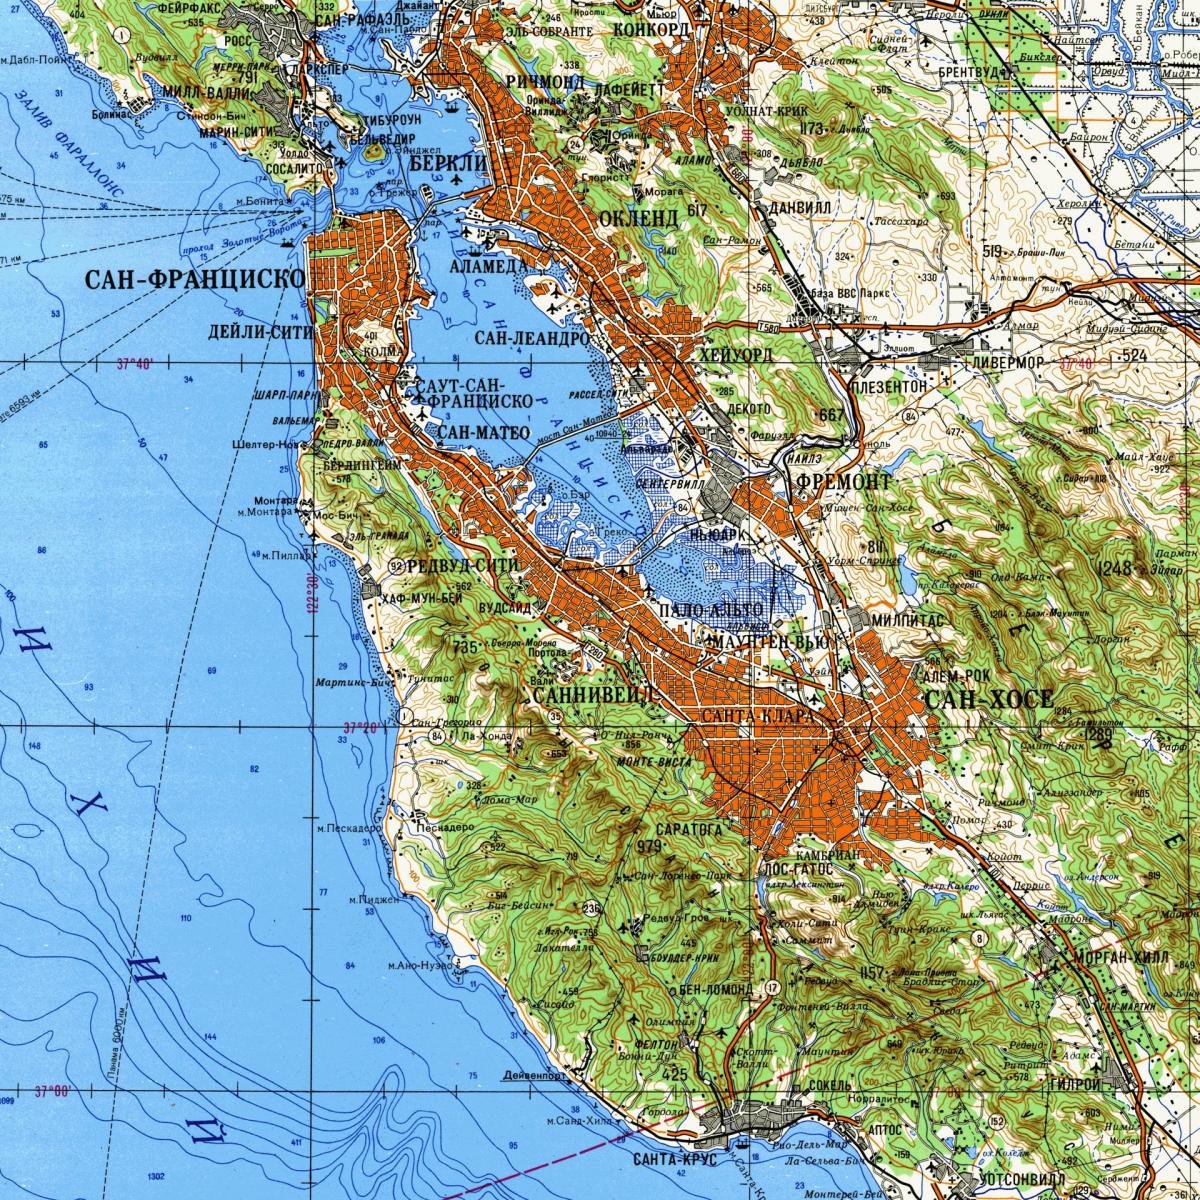 सैन फ्रांसिस्को खाड़ी क्षेत्र का स्थलाकृतिक मानचित्र